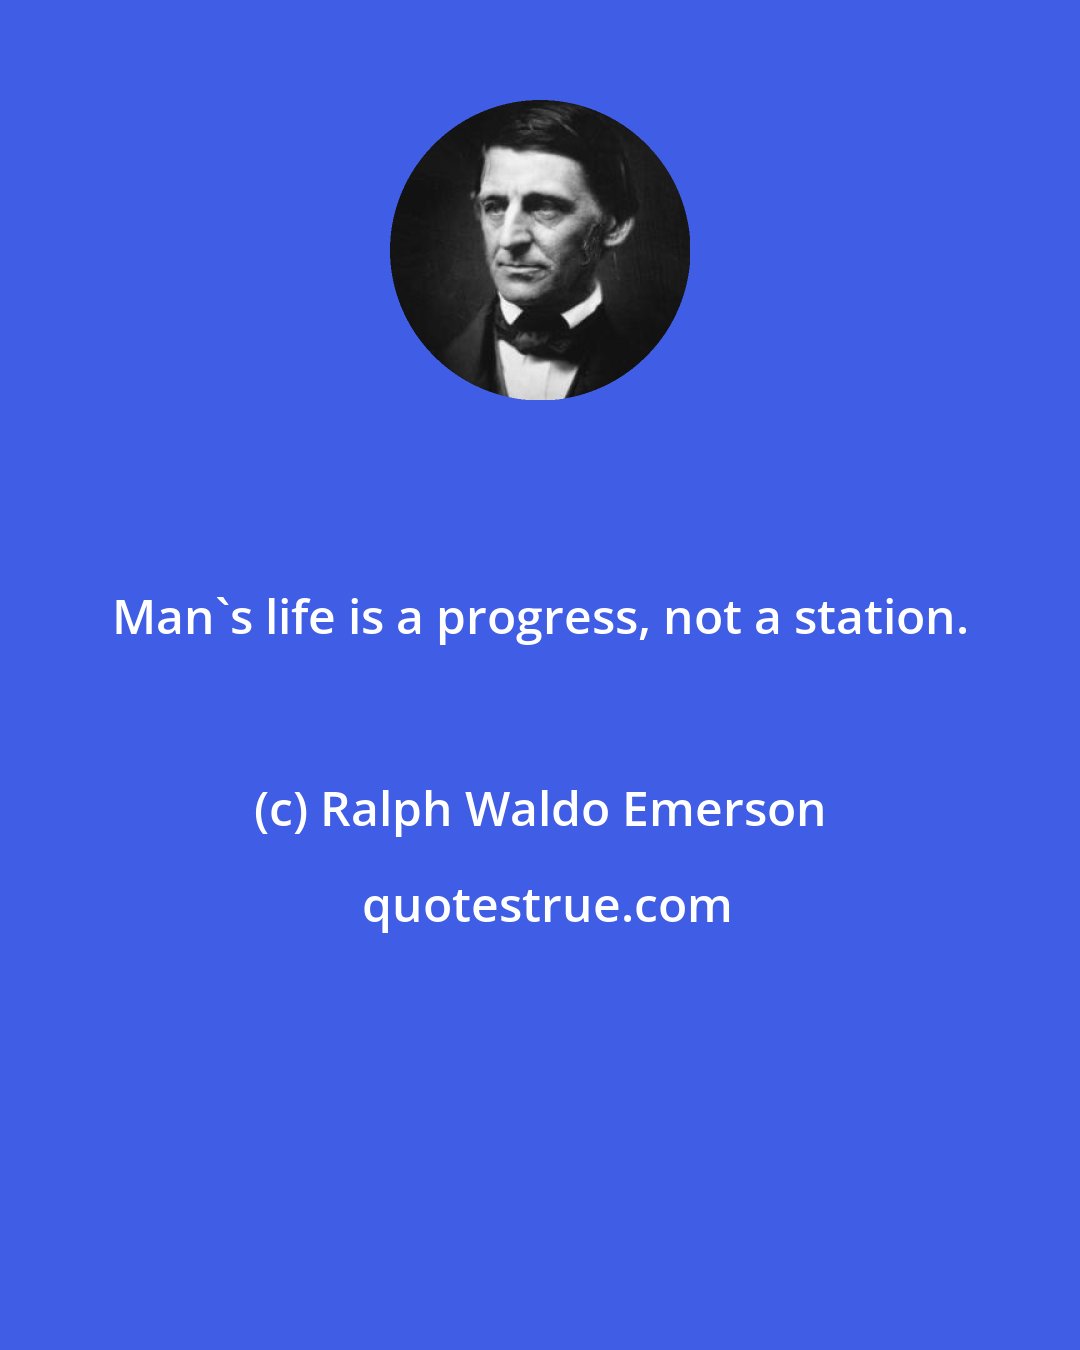 Ralph Waldo Emerson: Man's life is a progress, not a station.